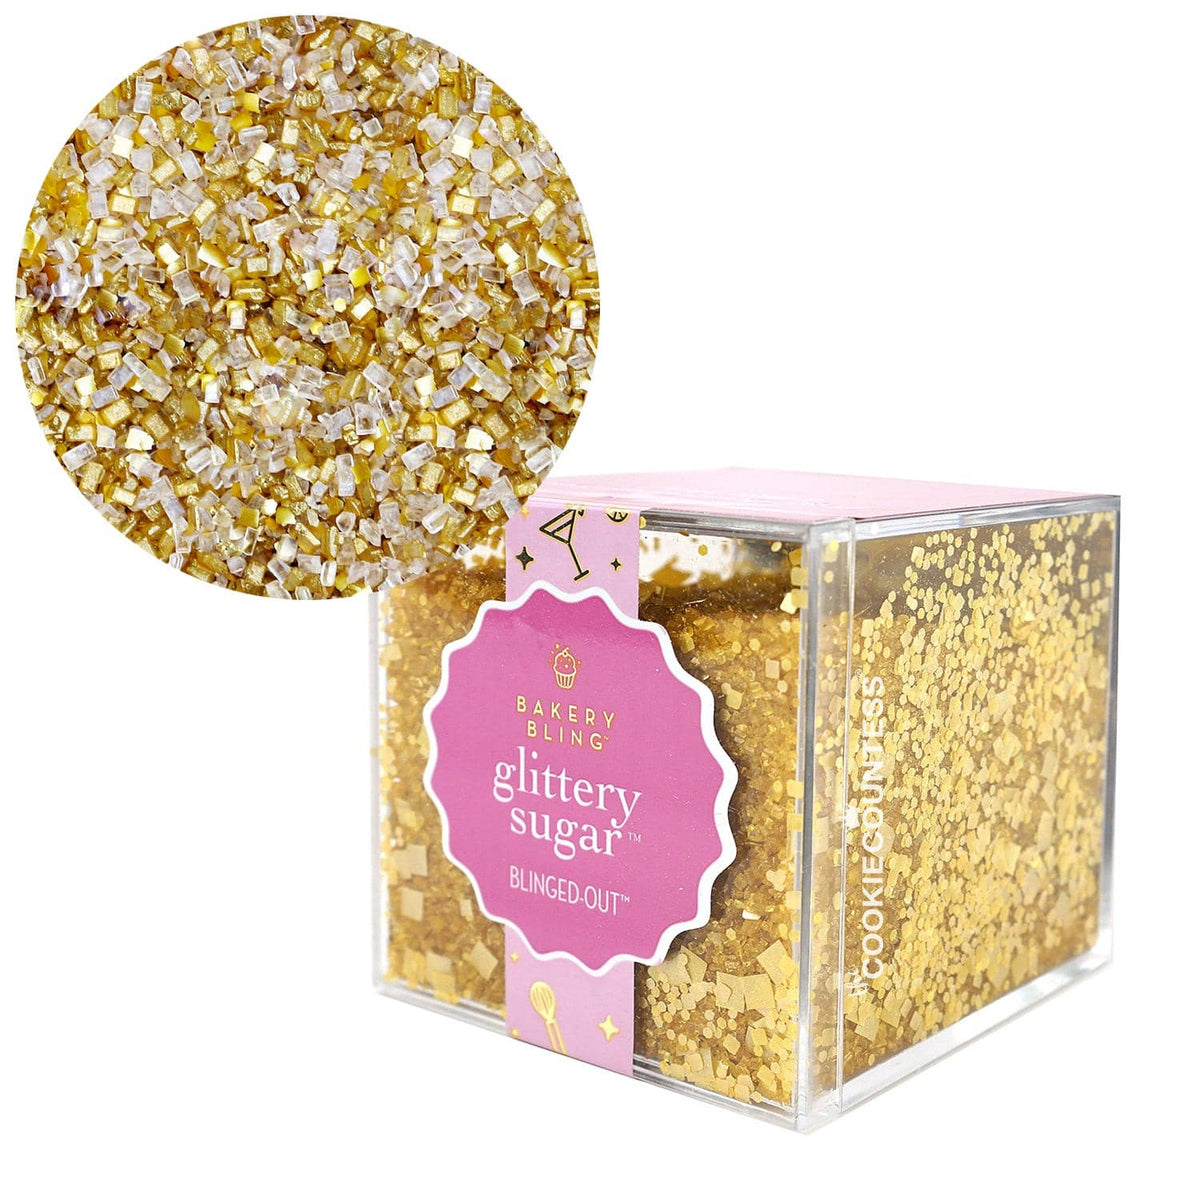 Gold Edible Glitter  Bakers Choice - Premium Kosher Baking